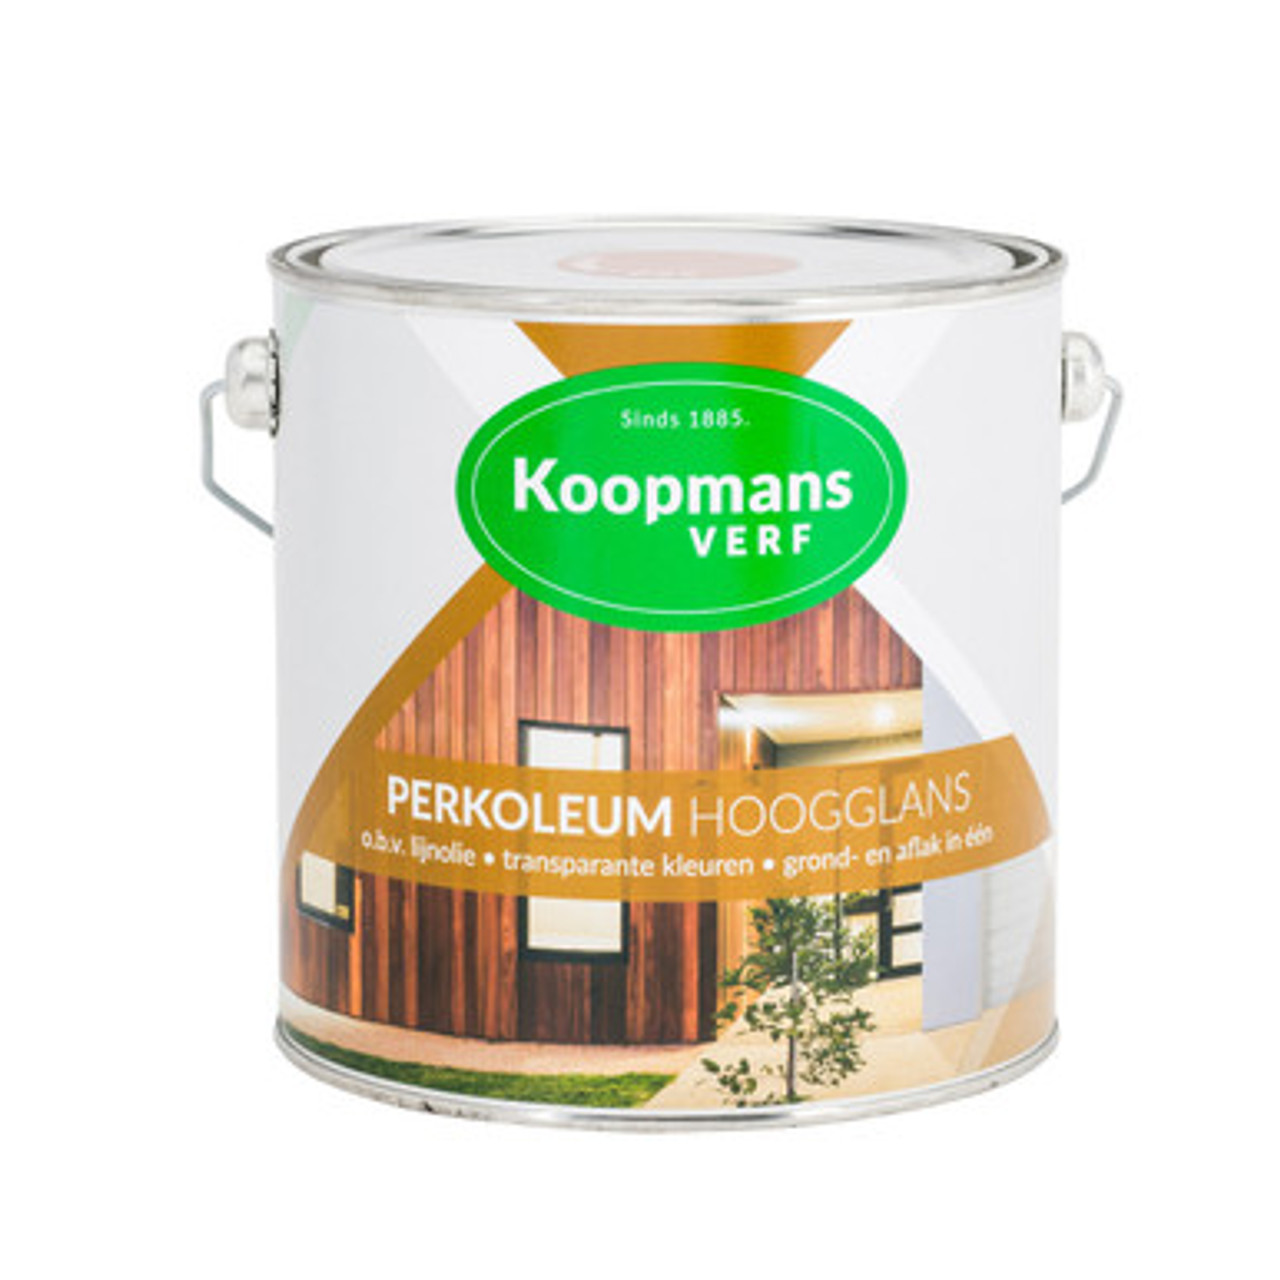 Koopmans Perkoleum Hoogglans Transparant | Langer Glansbehoud Onlineverf.nl